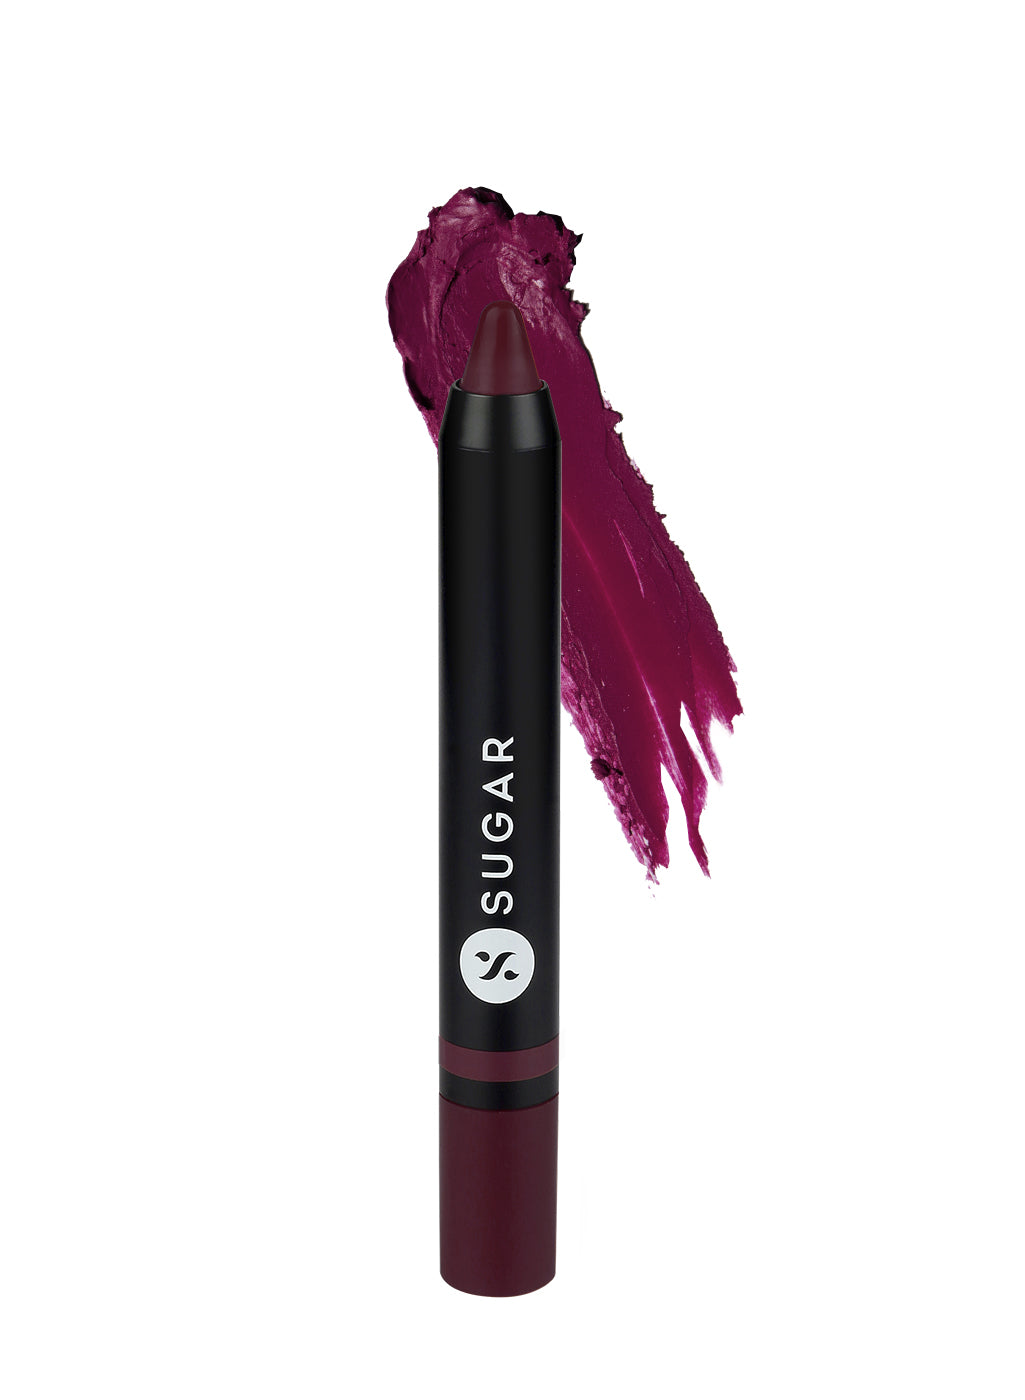 SUGAR Cosmetics Plush Crush Crème Crayon - 06 Grape Goddess (Deep Mauve with hints of purple)